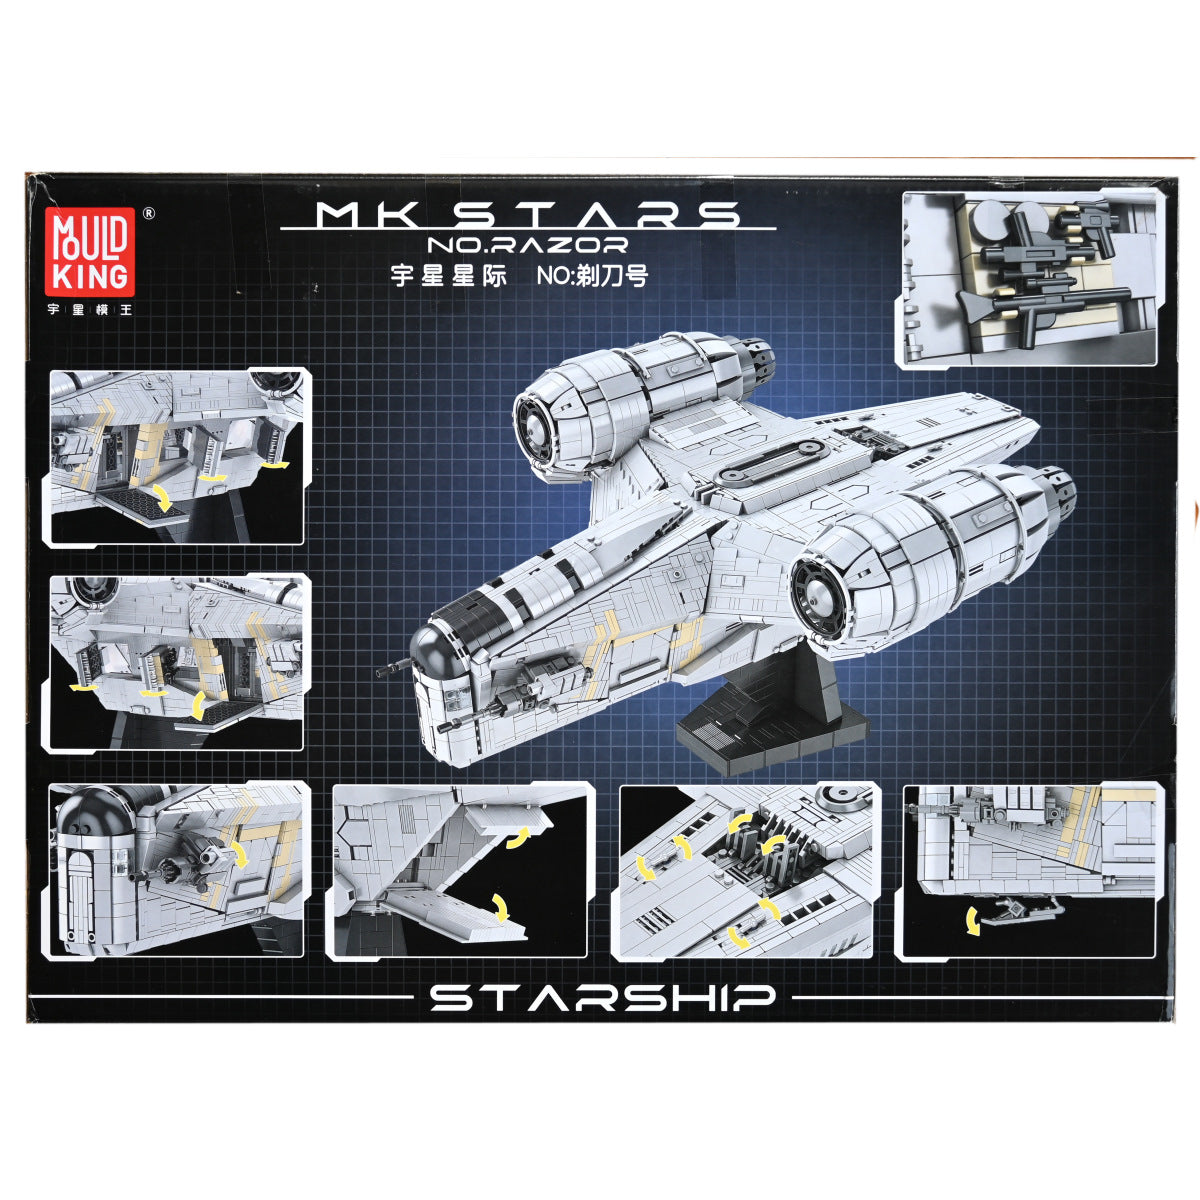 Mould King - MK Stars Razor Starship (21023) / 2 Wochen mieten